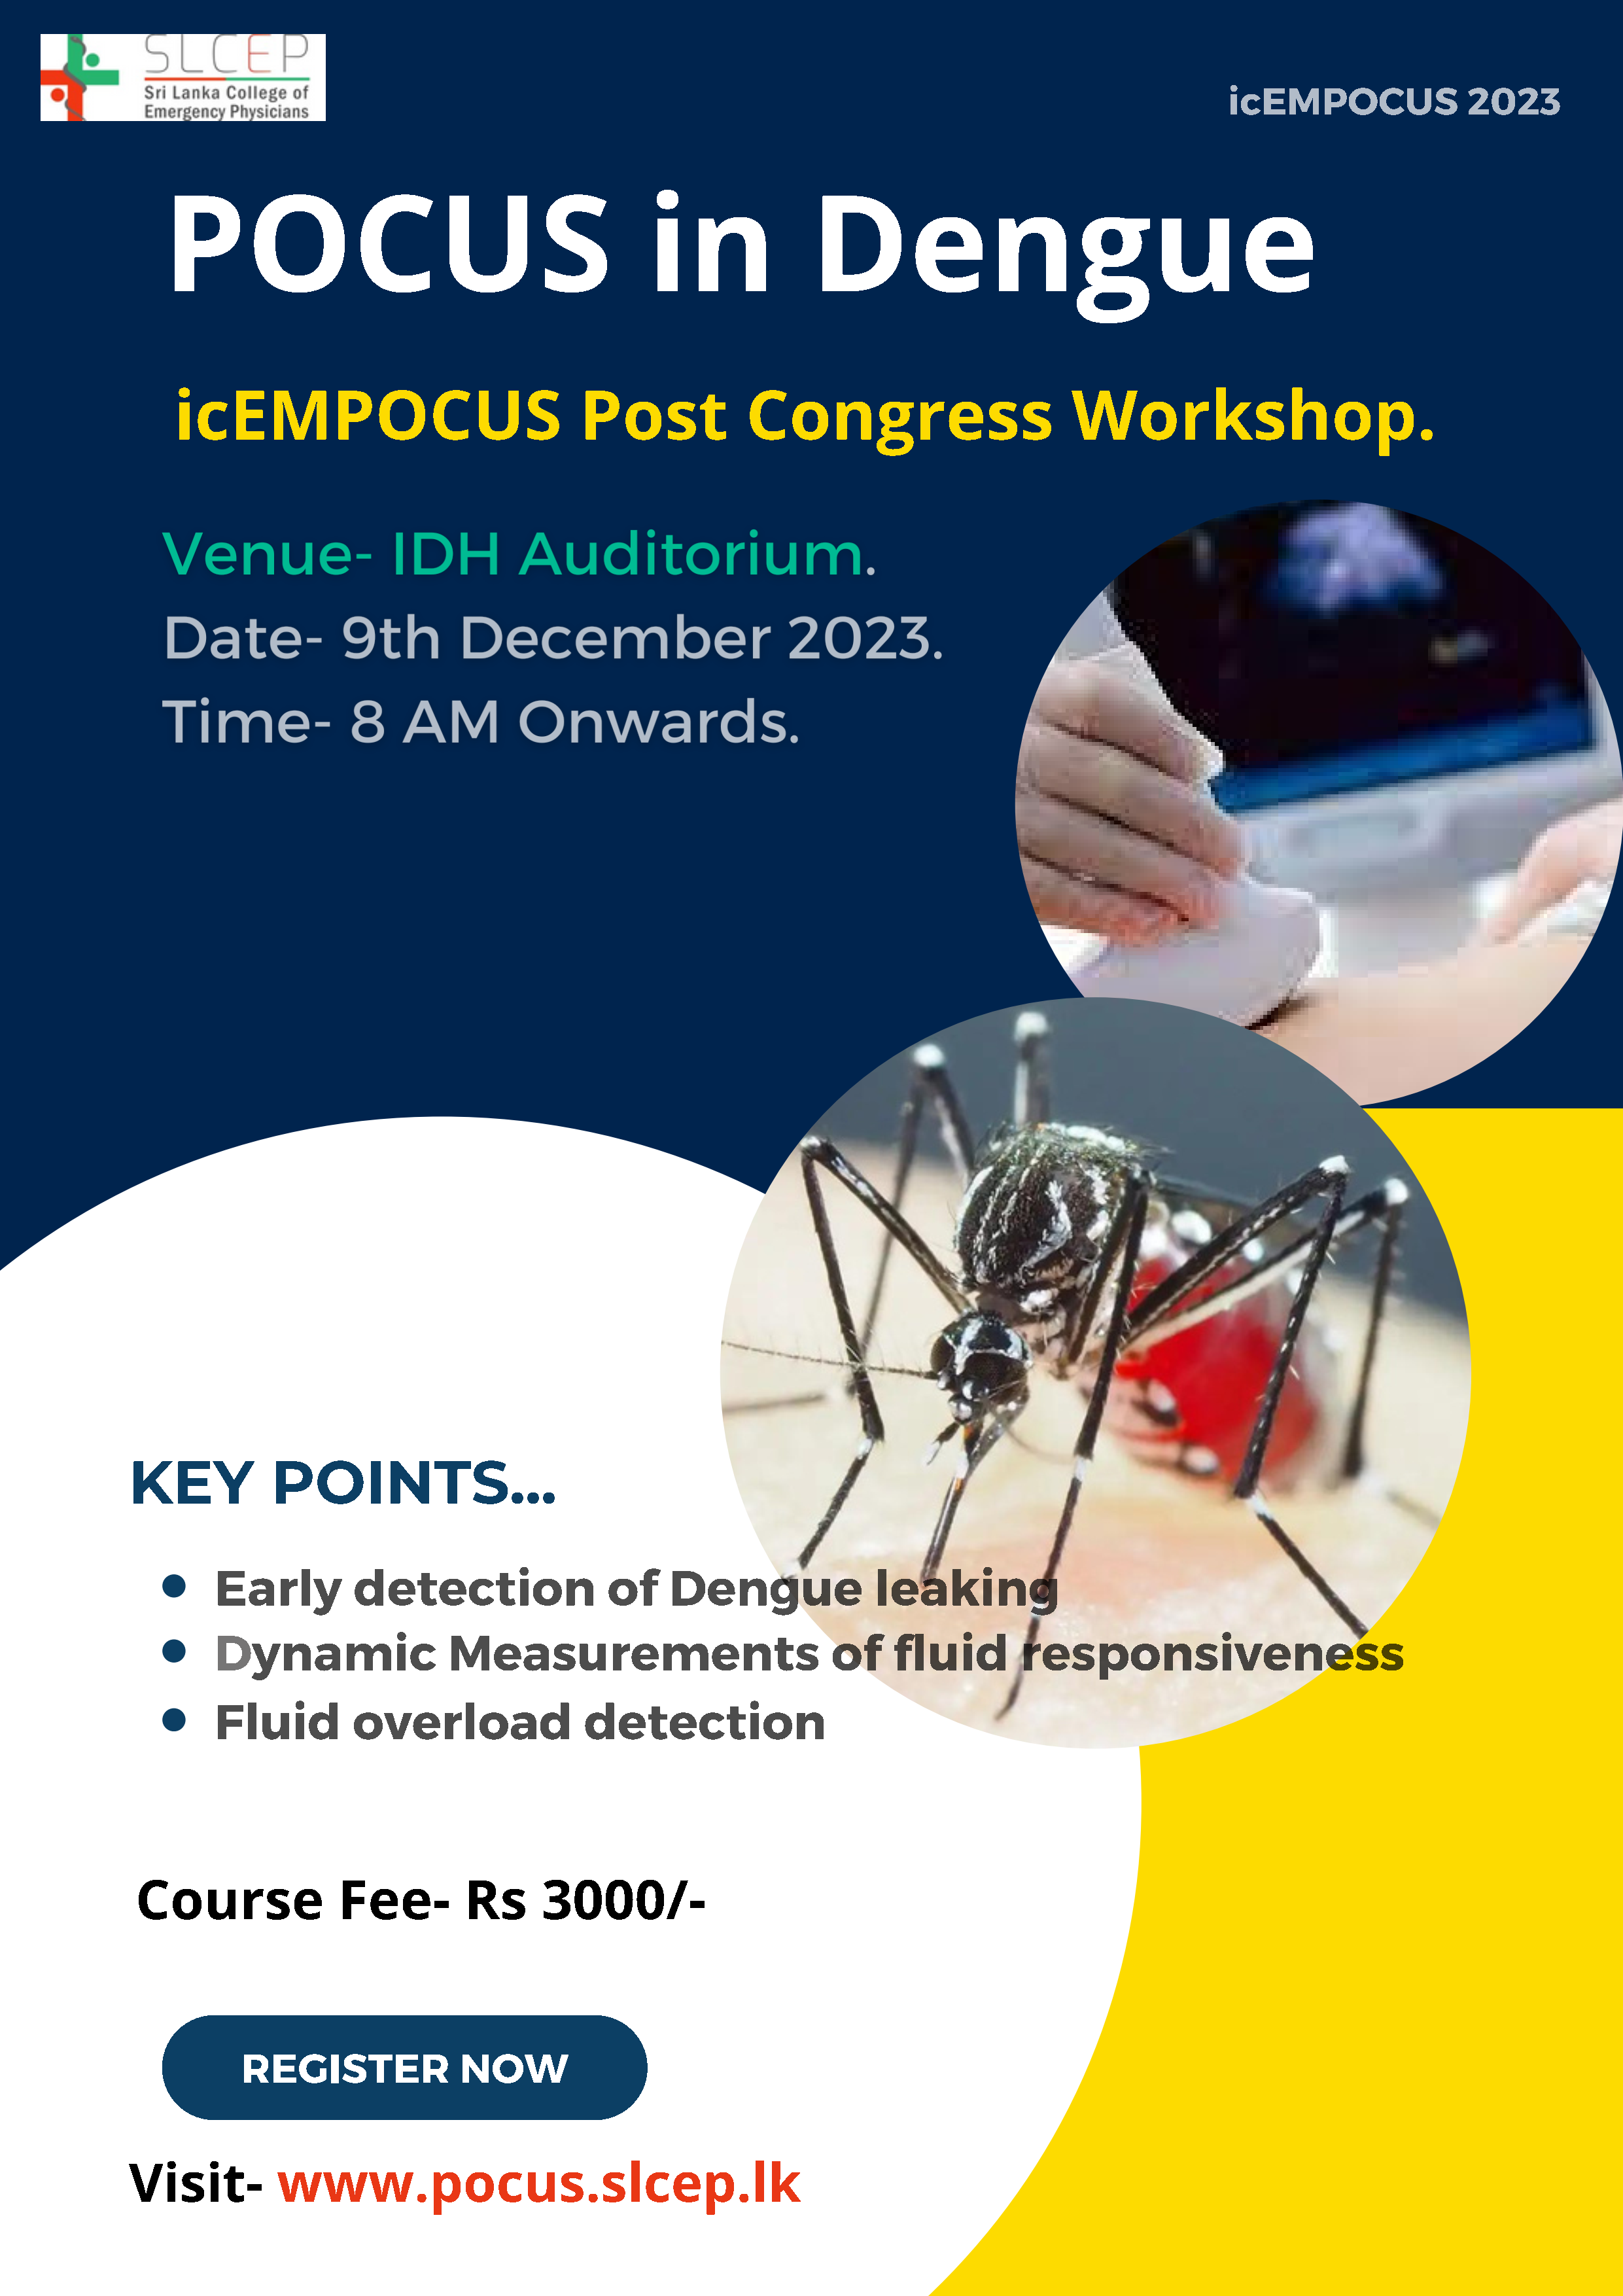 icEM POCUS 2023 Post Congress Workshop 5